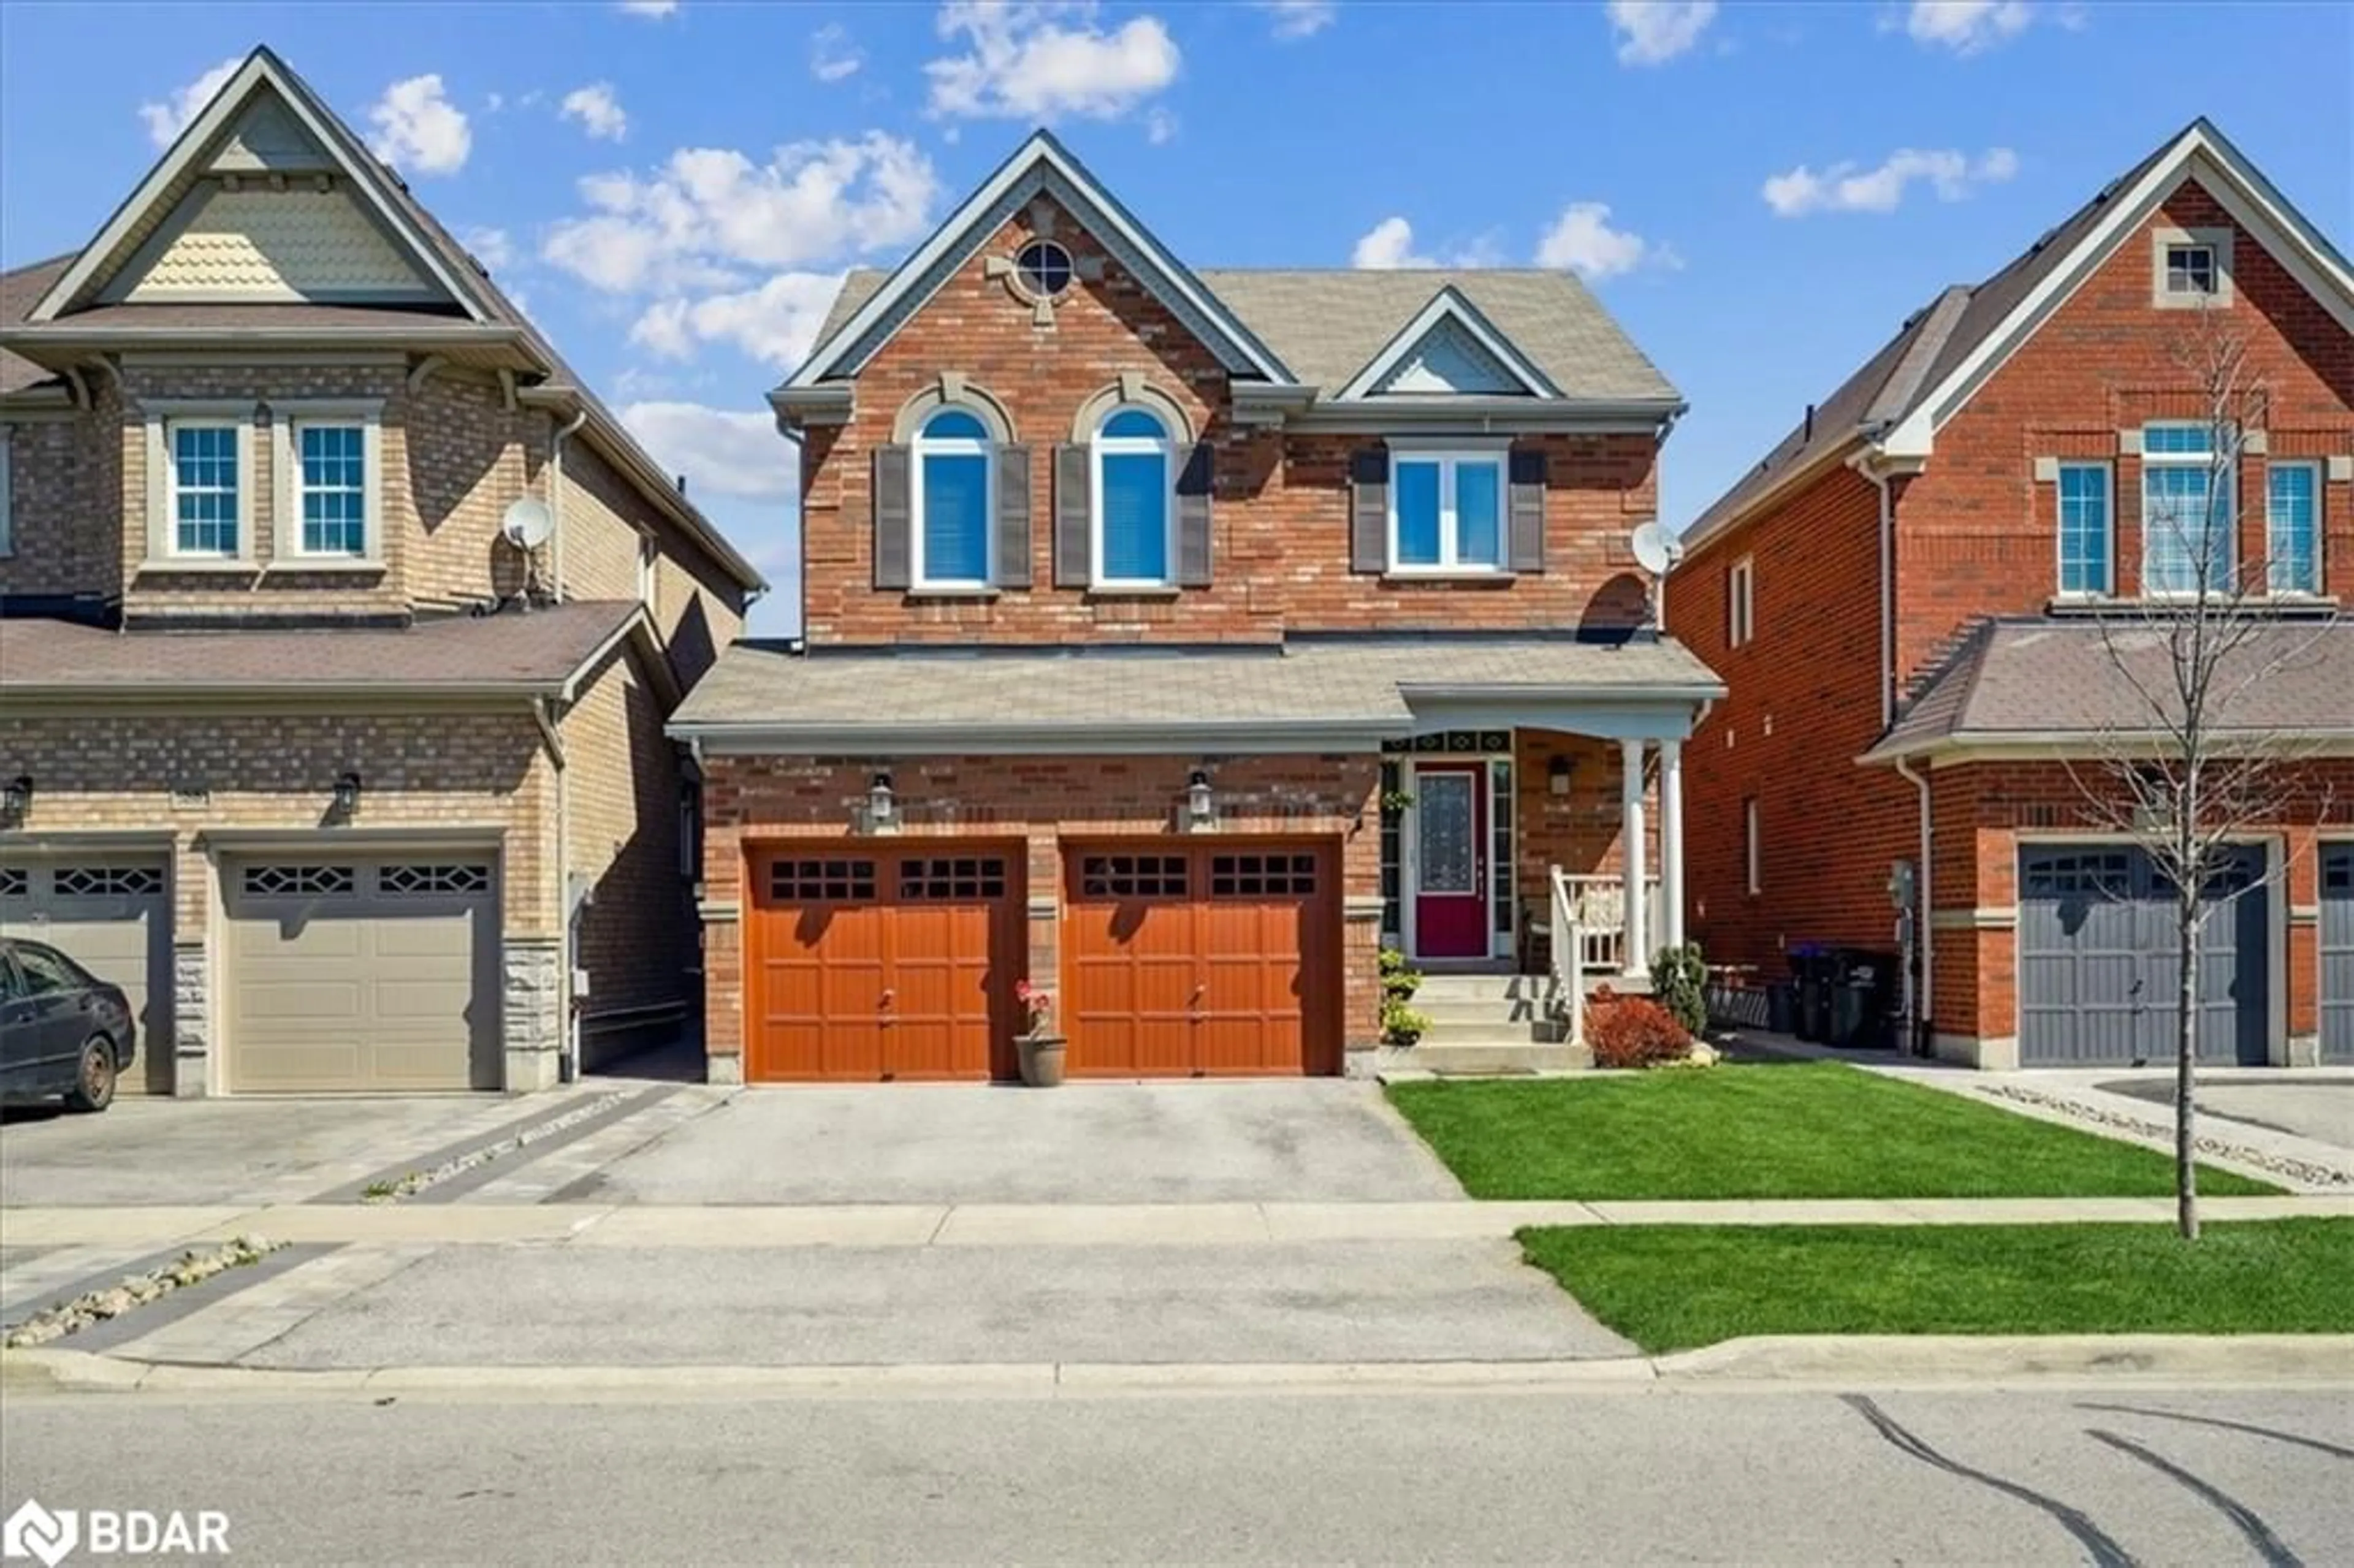 Home with brick exterior material for 54 Blue Dasher Blvd, Bradford West Gwillimbury Ontario L3Z 0E5